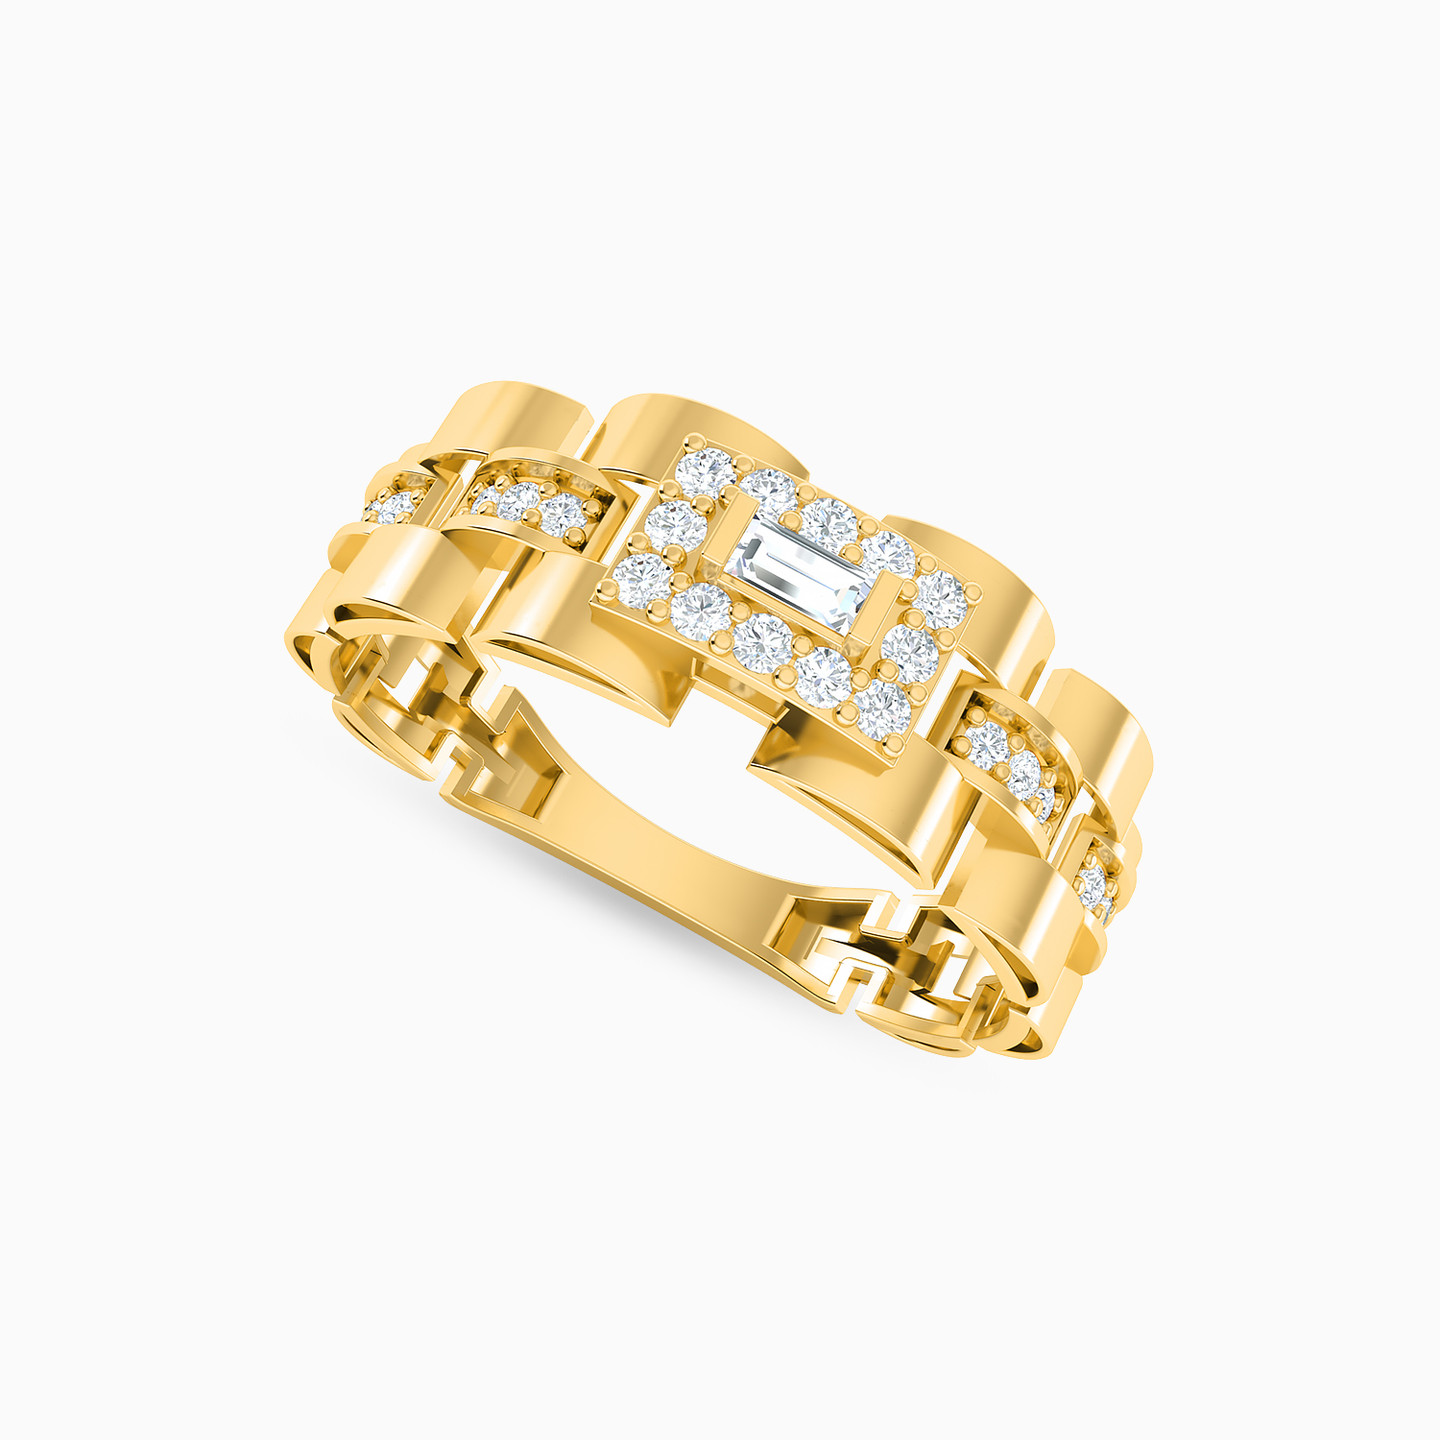 21K Gold Cubic Zirconia Statement Ring - 2